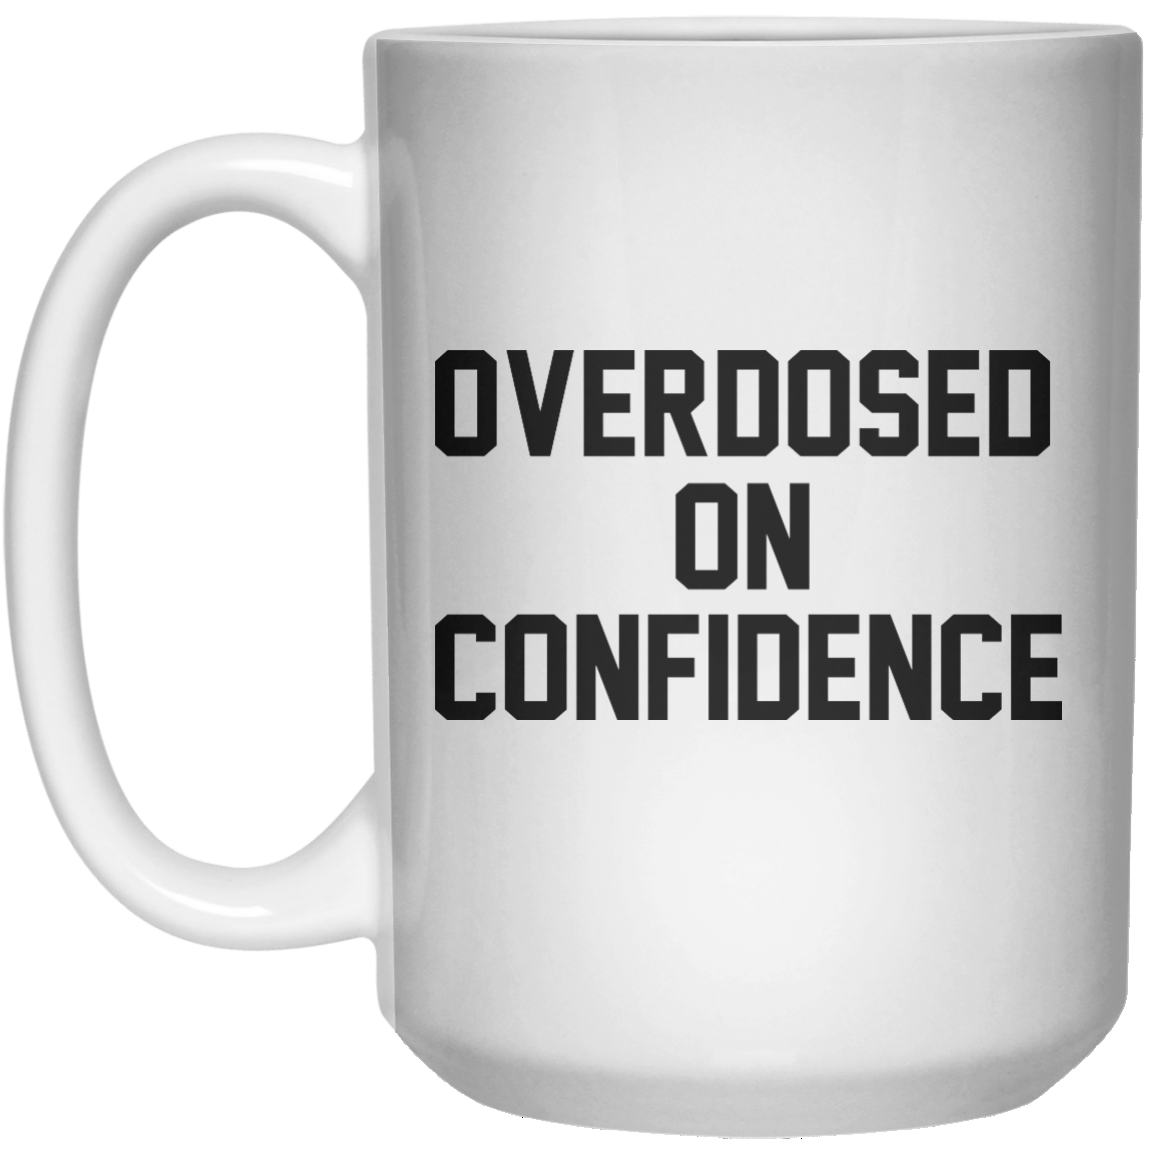 overdosed on confidence MUG  Mug - 15oz - Shirtoopia